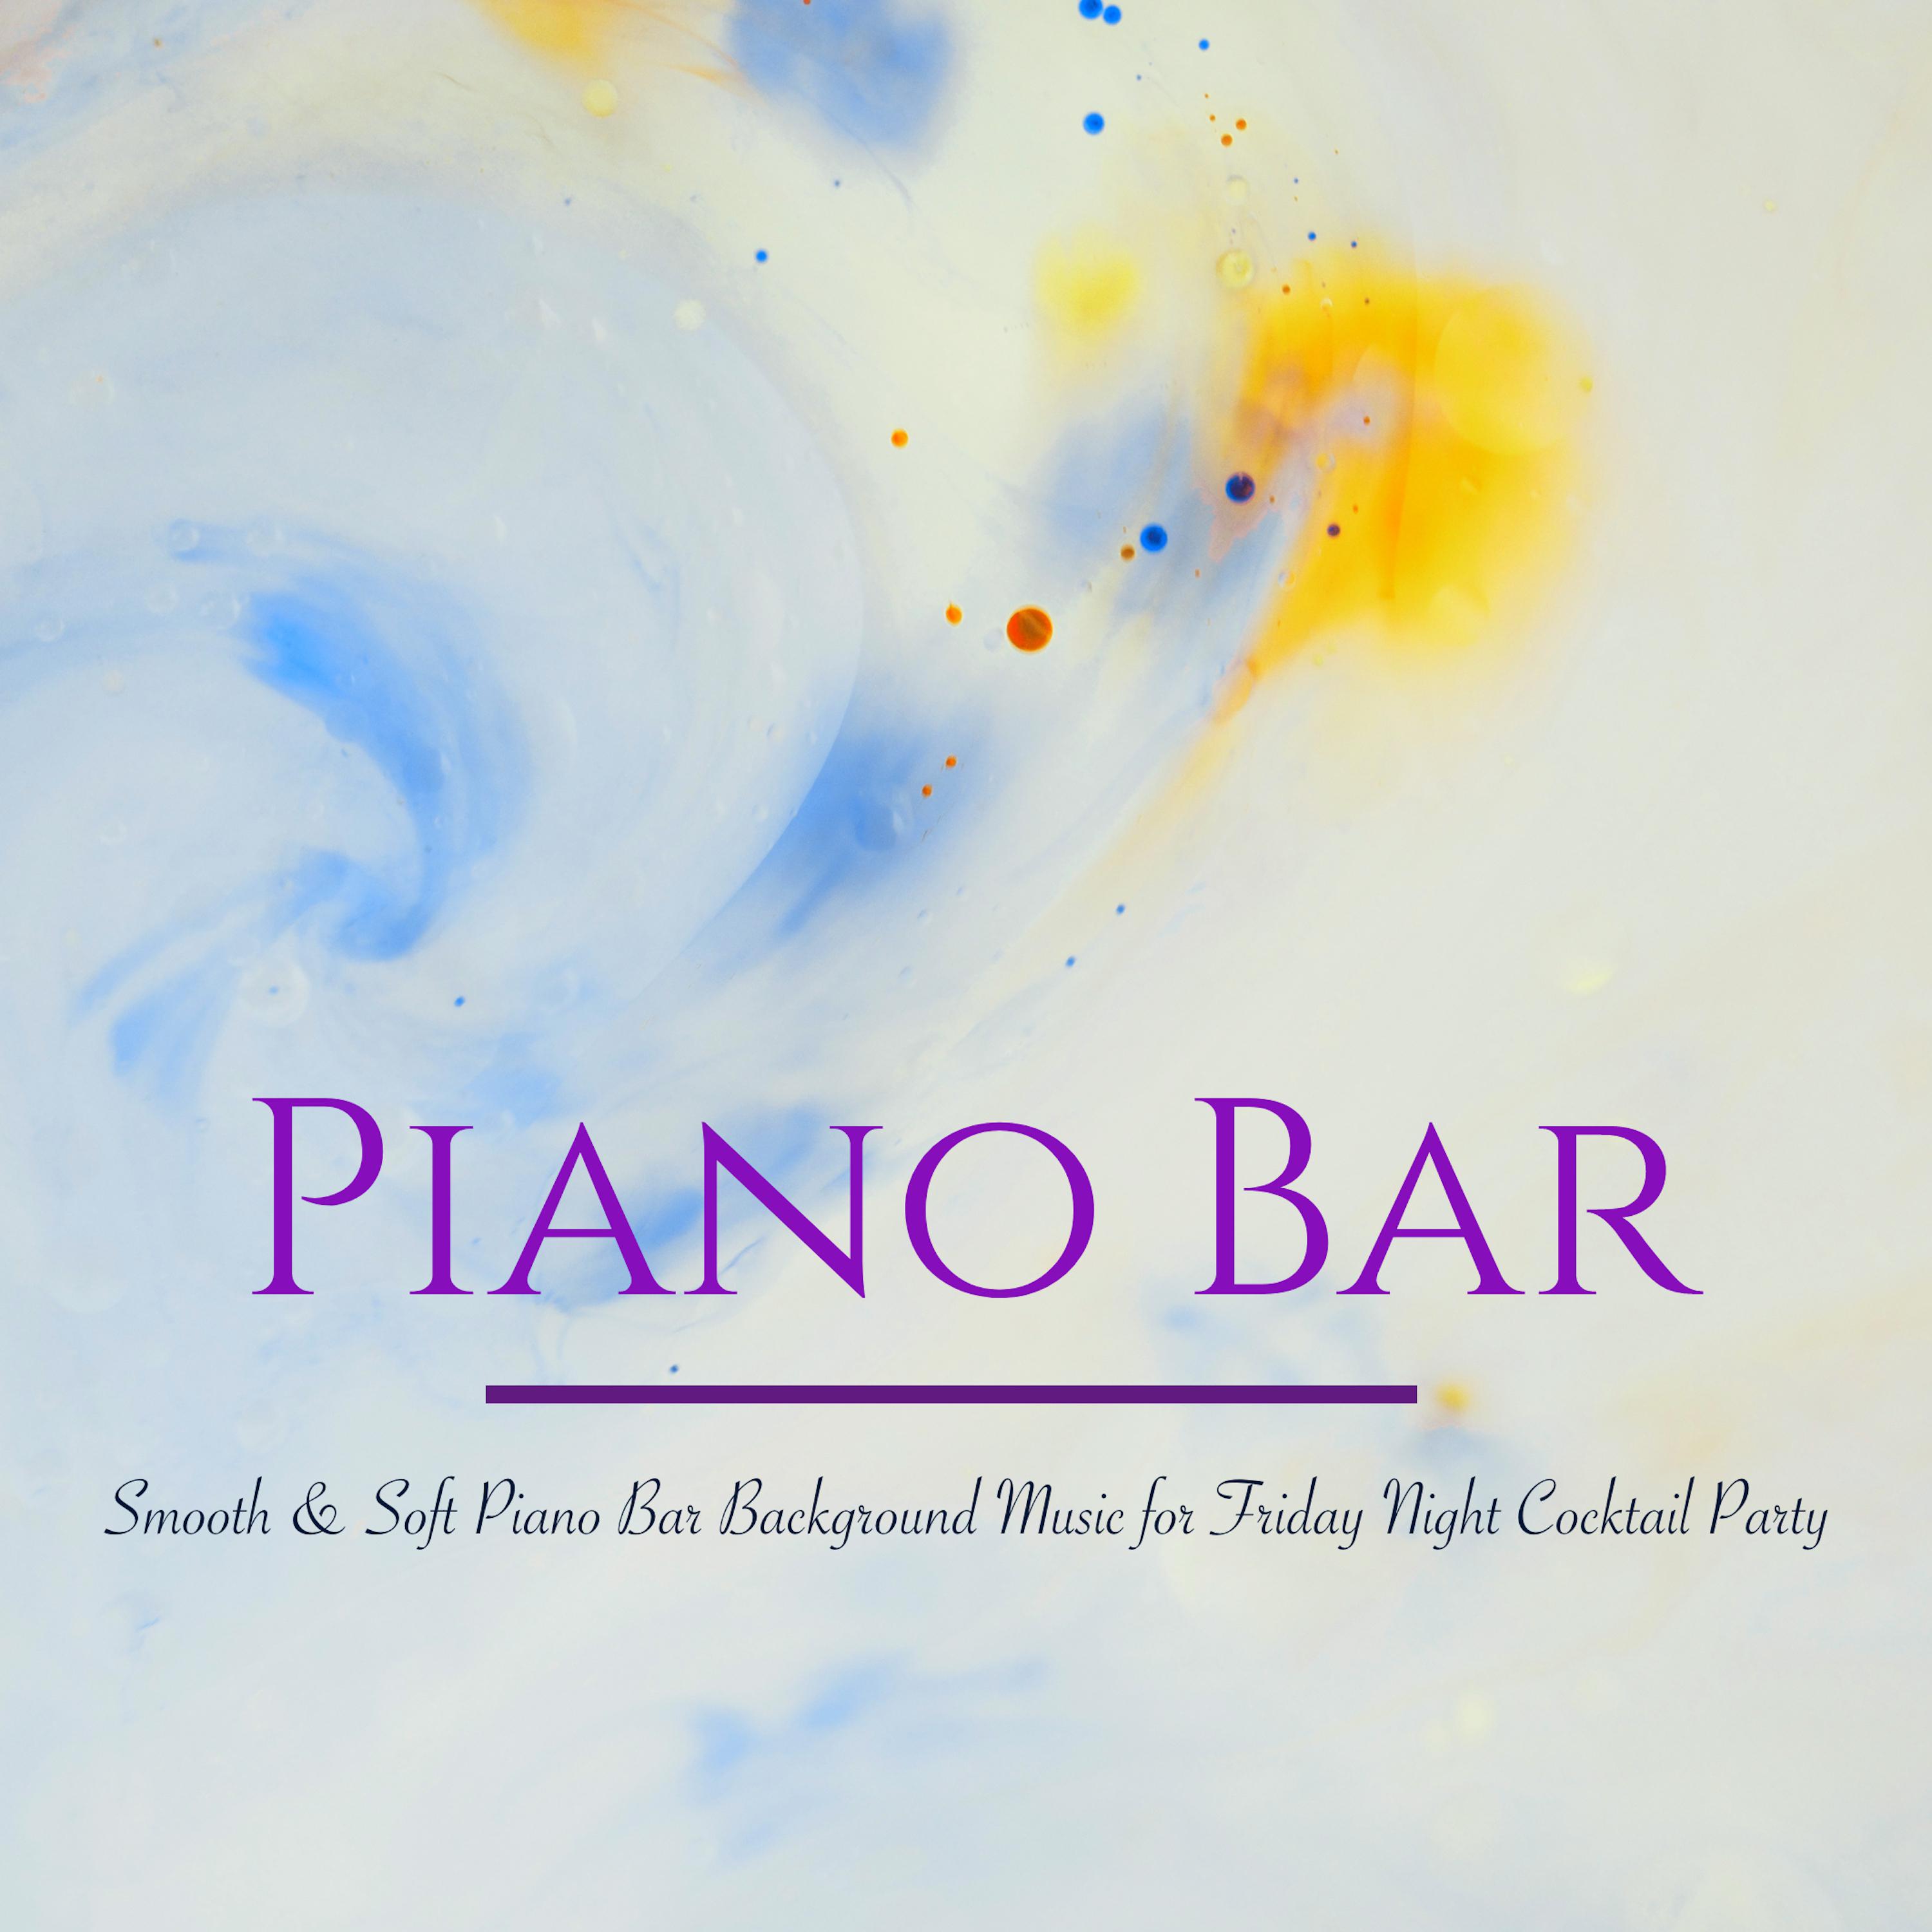 Cocktails & Drinks - Pianobar